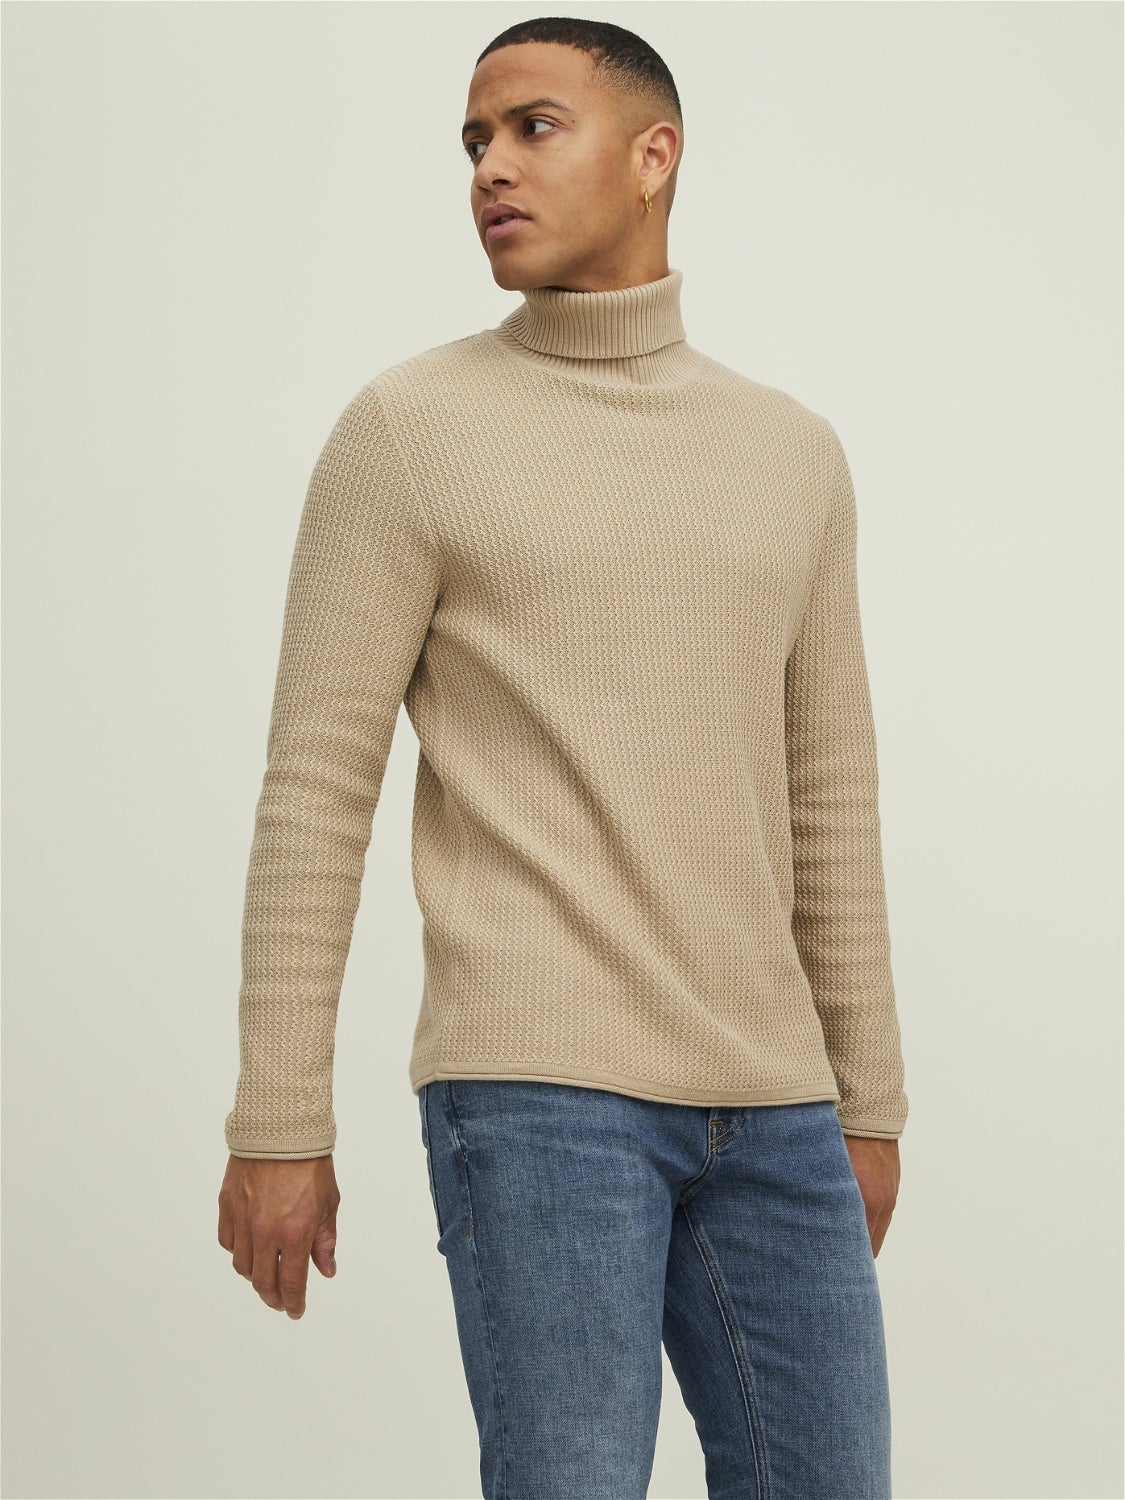 MEN FASHION Jumpers & Sweatshirts Knitted Jack & Jones jumper Brown L discount 63% 